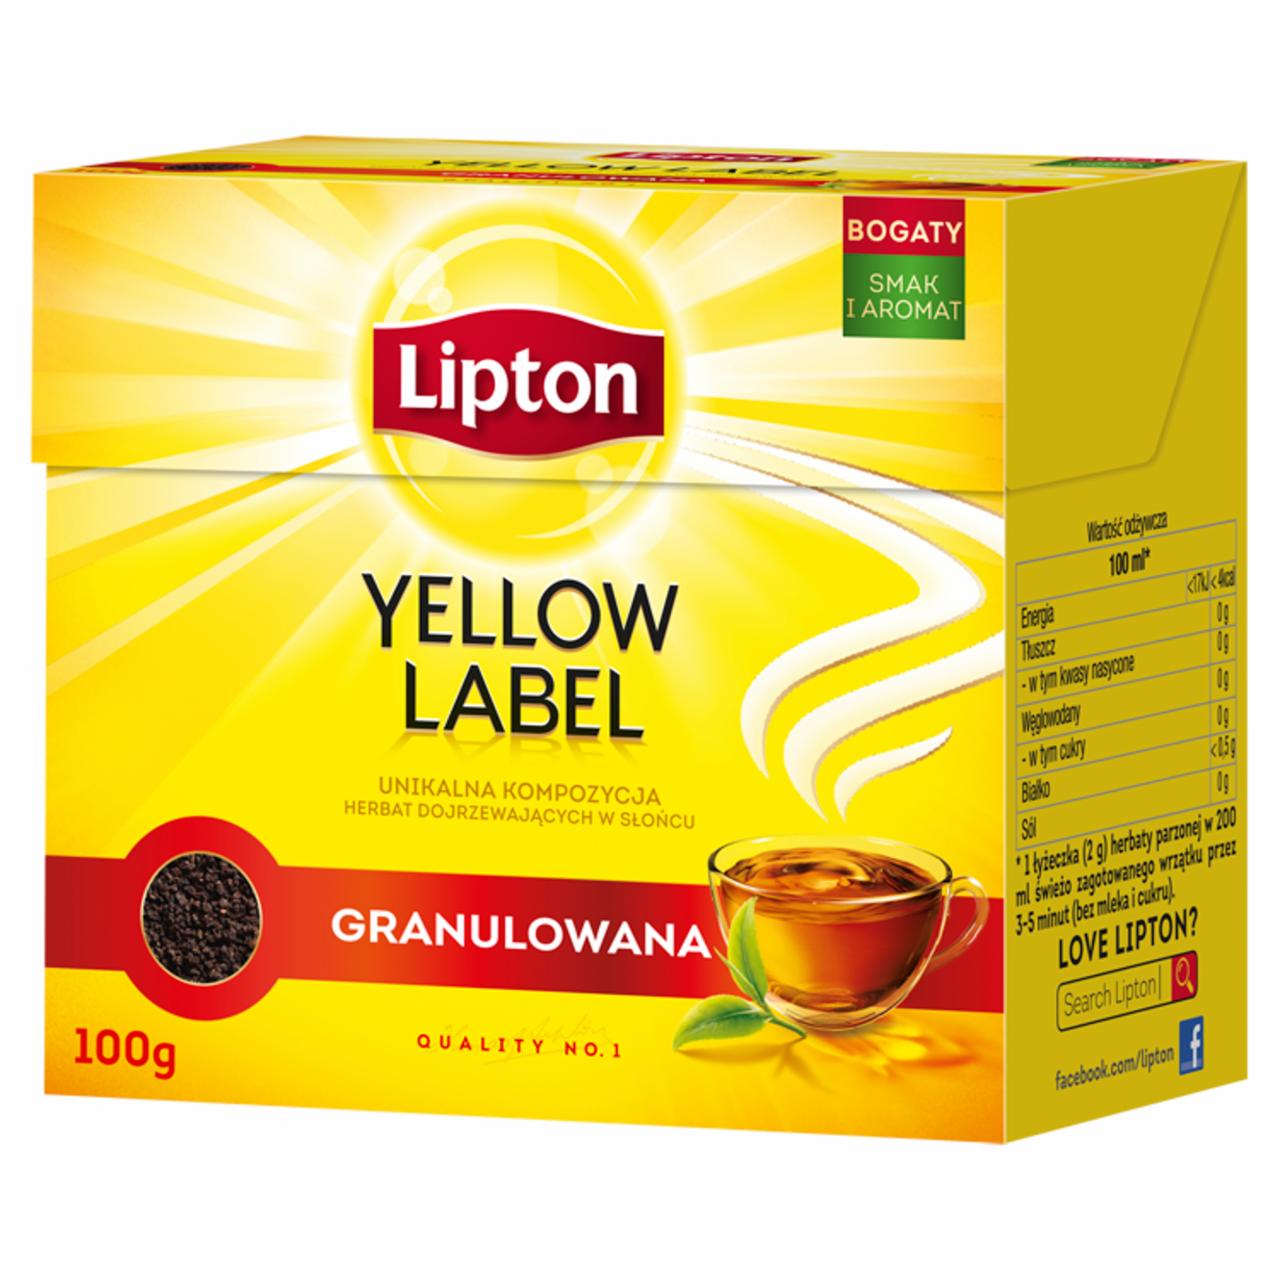 Zdjęcia - Lipton Yellow Label Herbata czarna granulowana 100 g